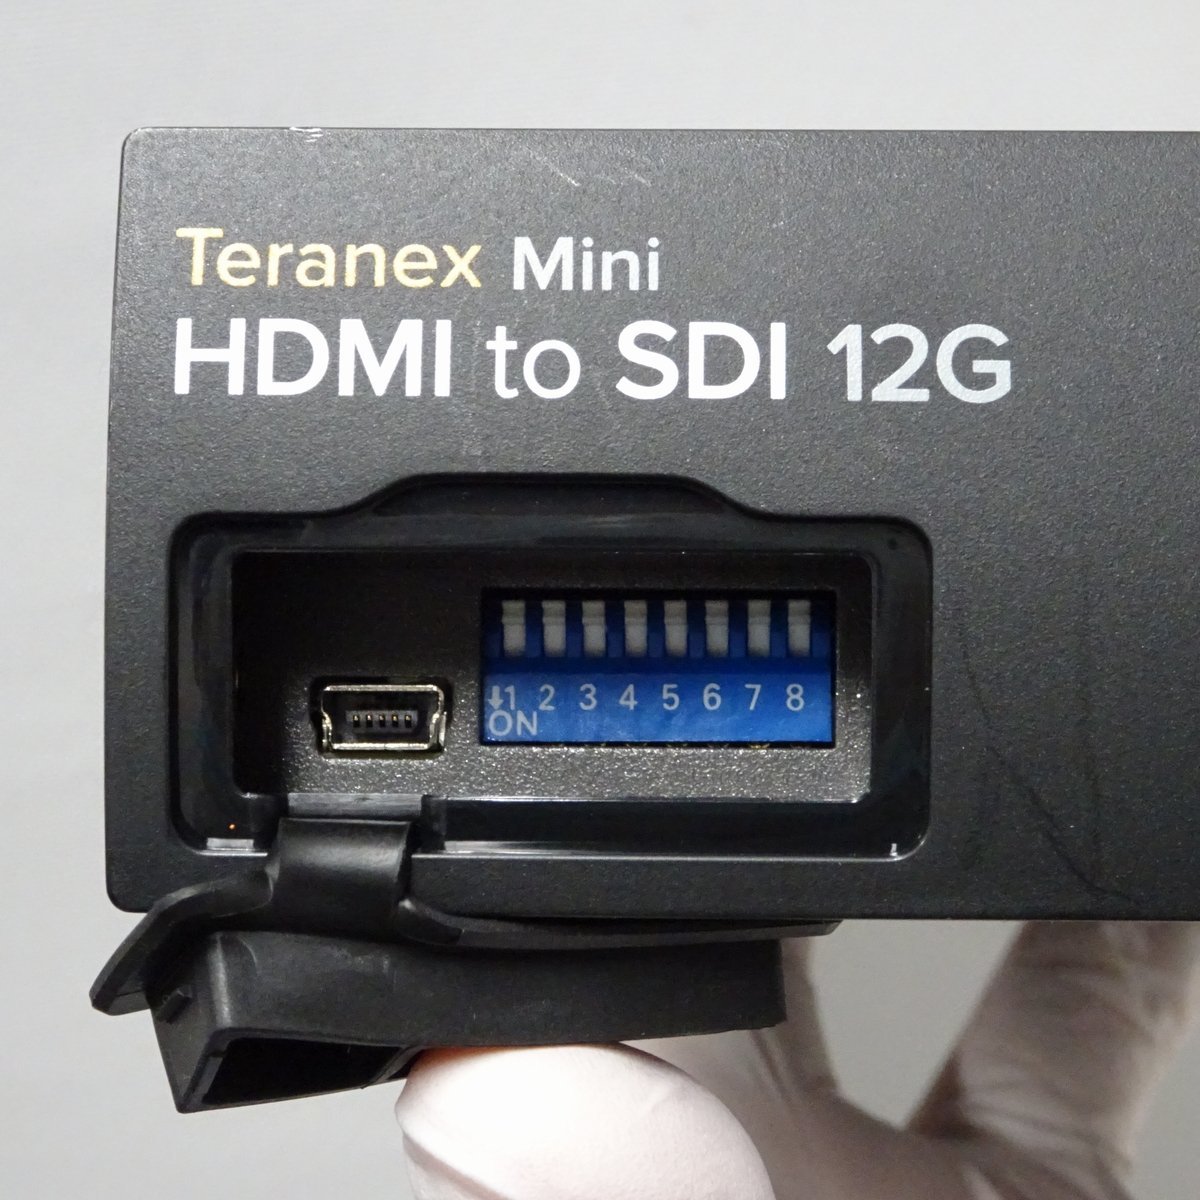 Blackmagic Design製 Teranex Mini HDMI to SDI 12G コンバーター【/動作品】#378657 